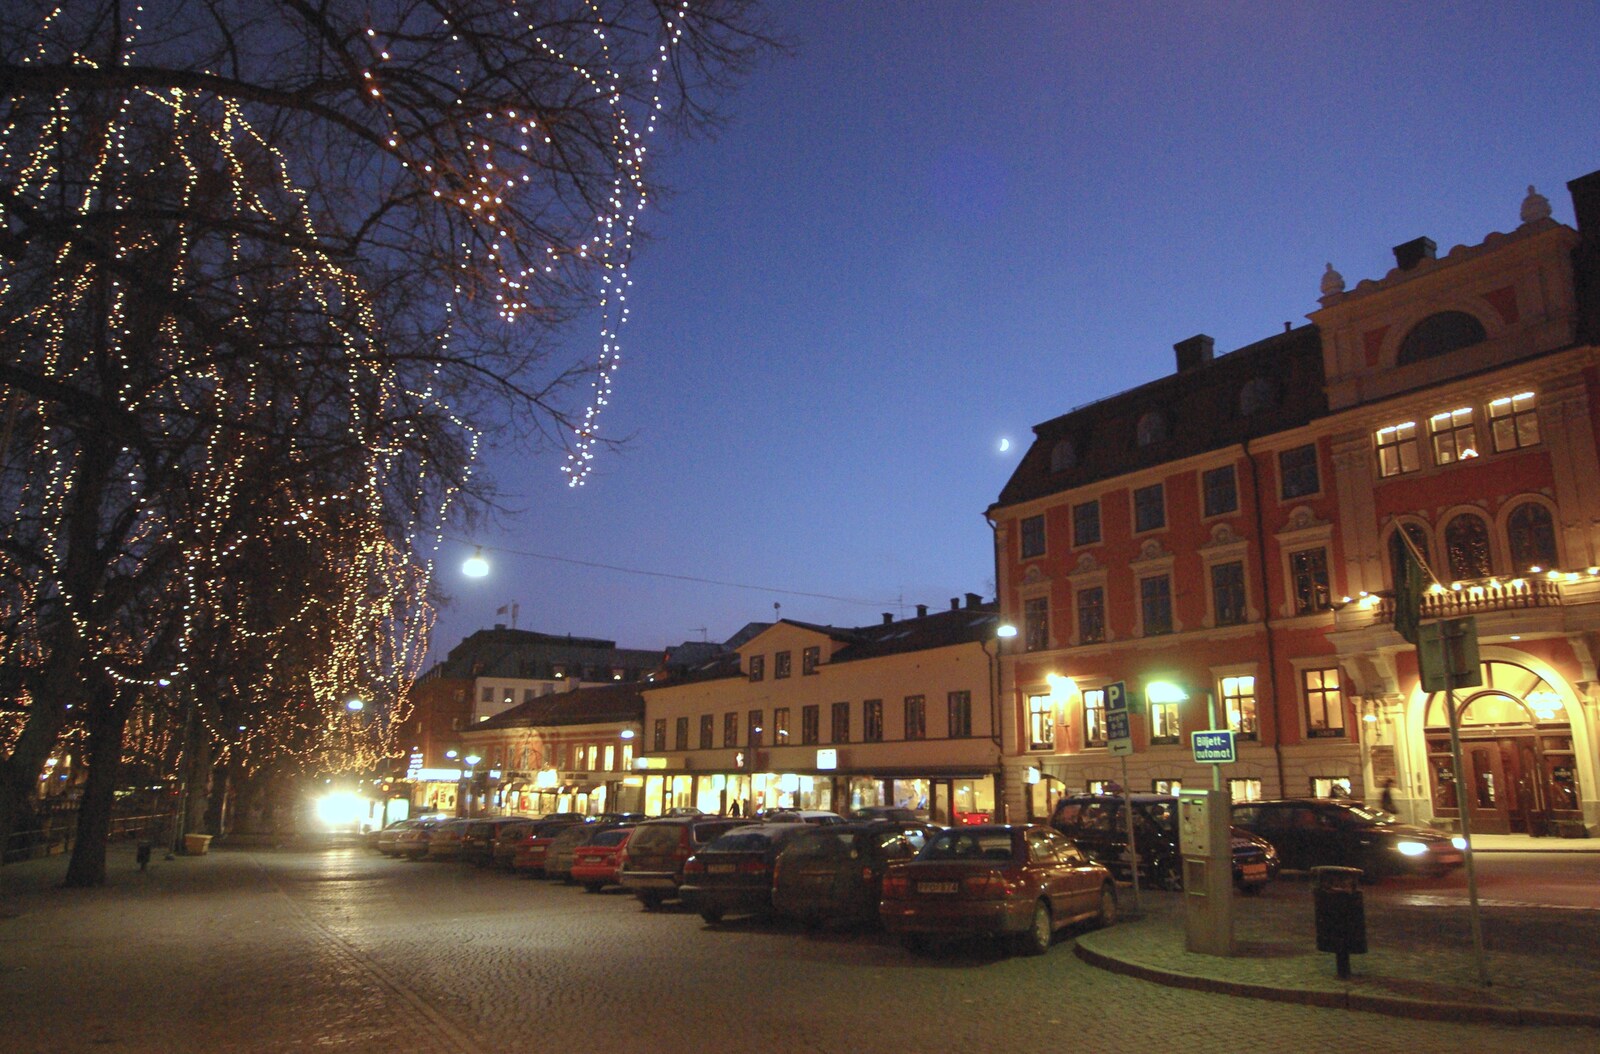 Uppsala street scene from Gamla Uppsala, Uppsala County, Sweden - 16th December 2007